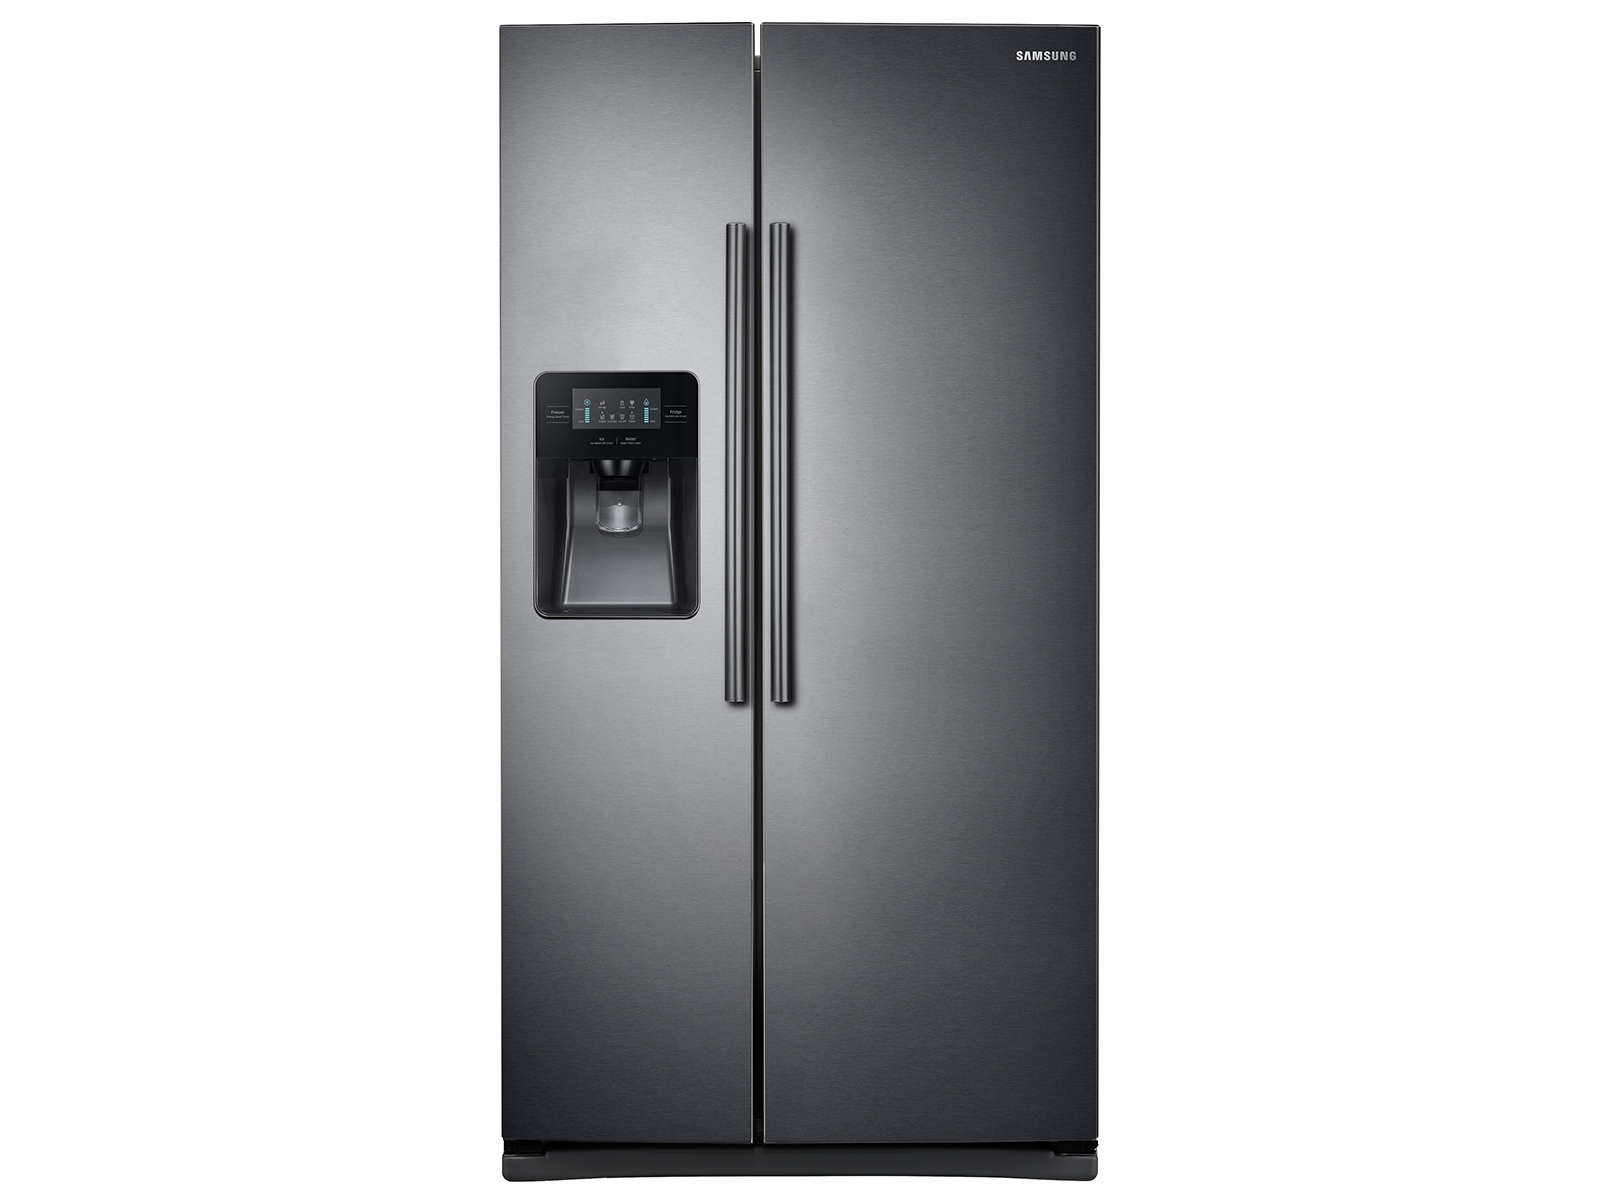 Samsung 25 cu. ft. Side-by-Side Refrigerator with LED Lighting in Black Stainless Steel, Fingerprint Resistant Black Stainless Steel